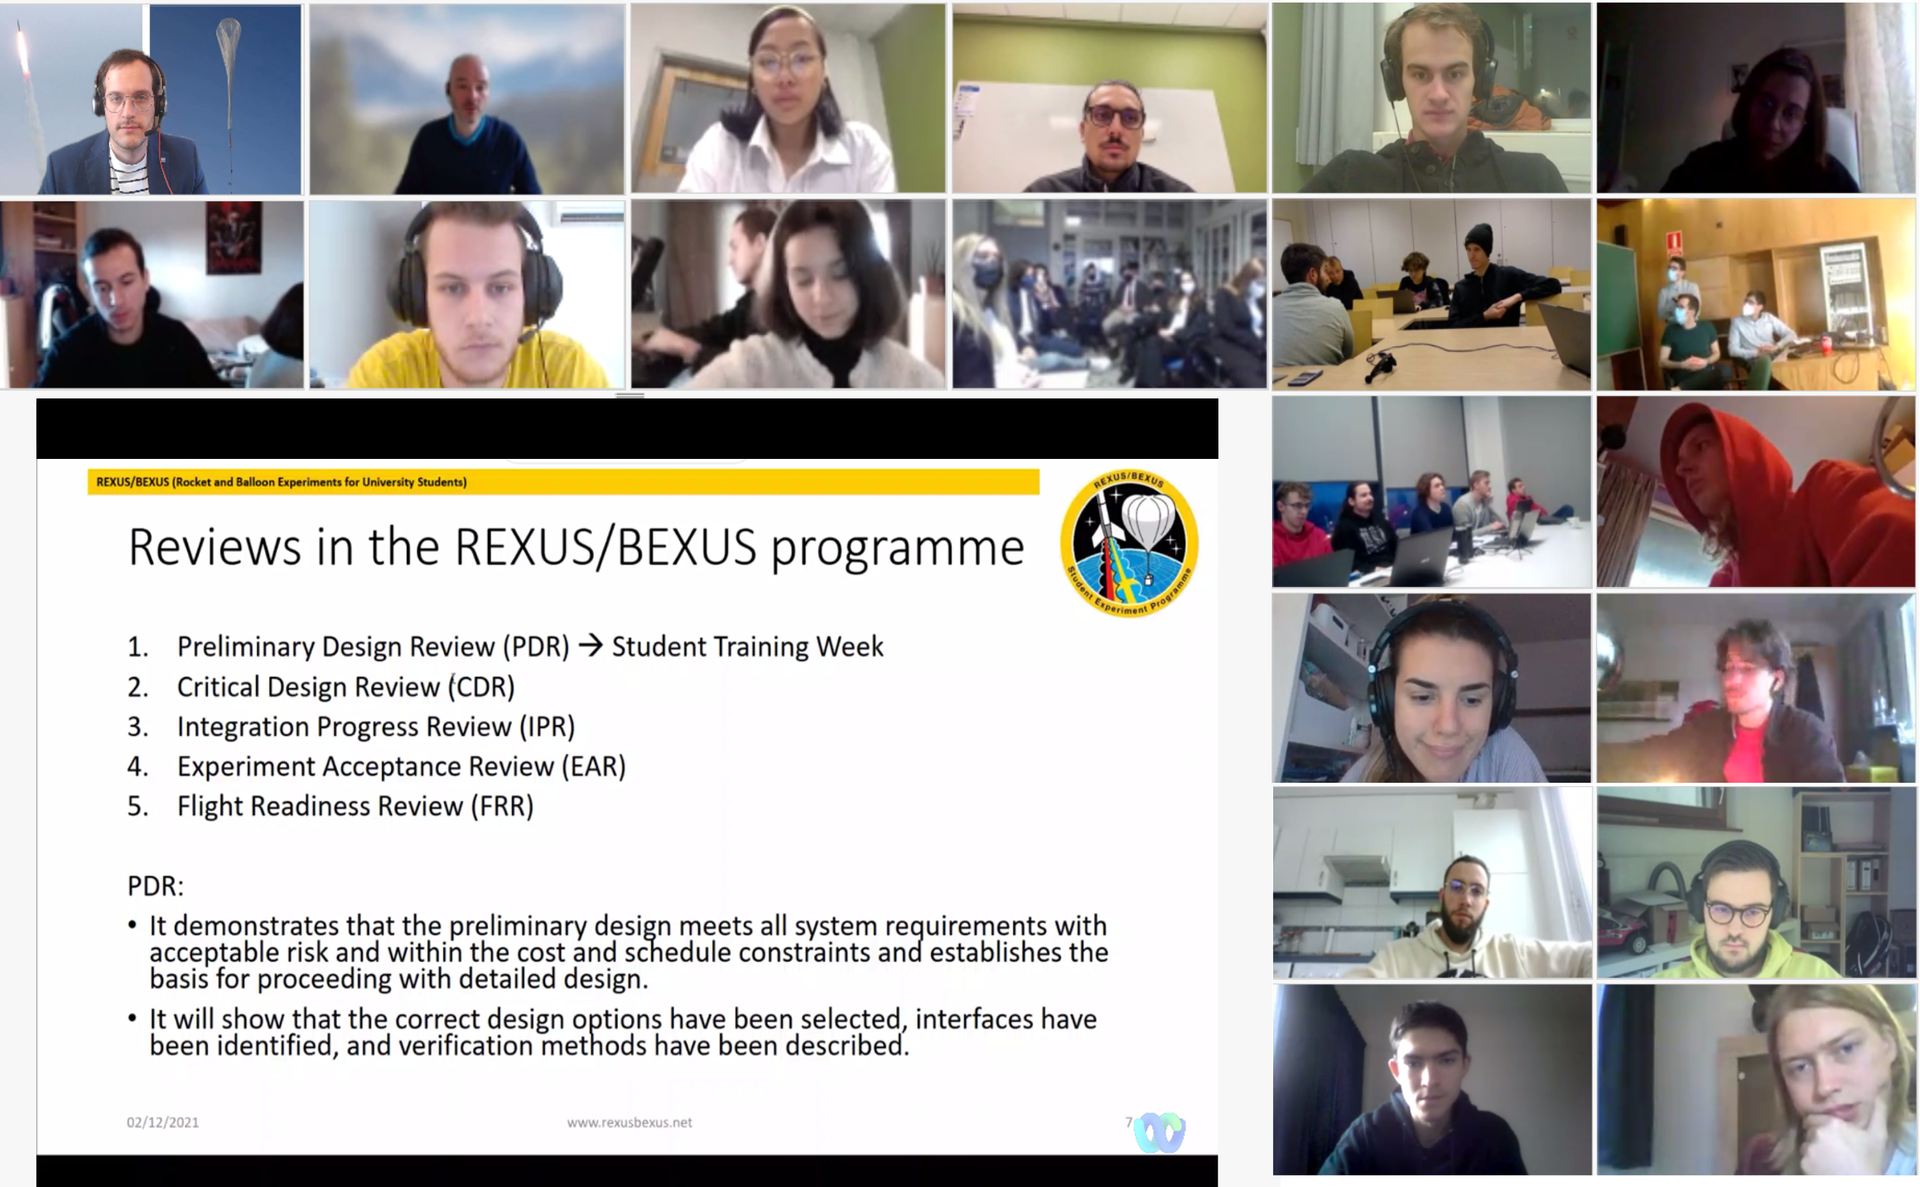 An expert from DLR MORABA explaining the reviews of the REXUS-BEXUS programme